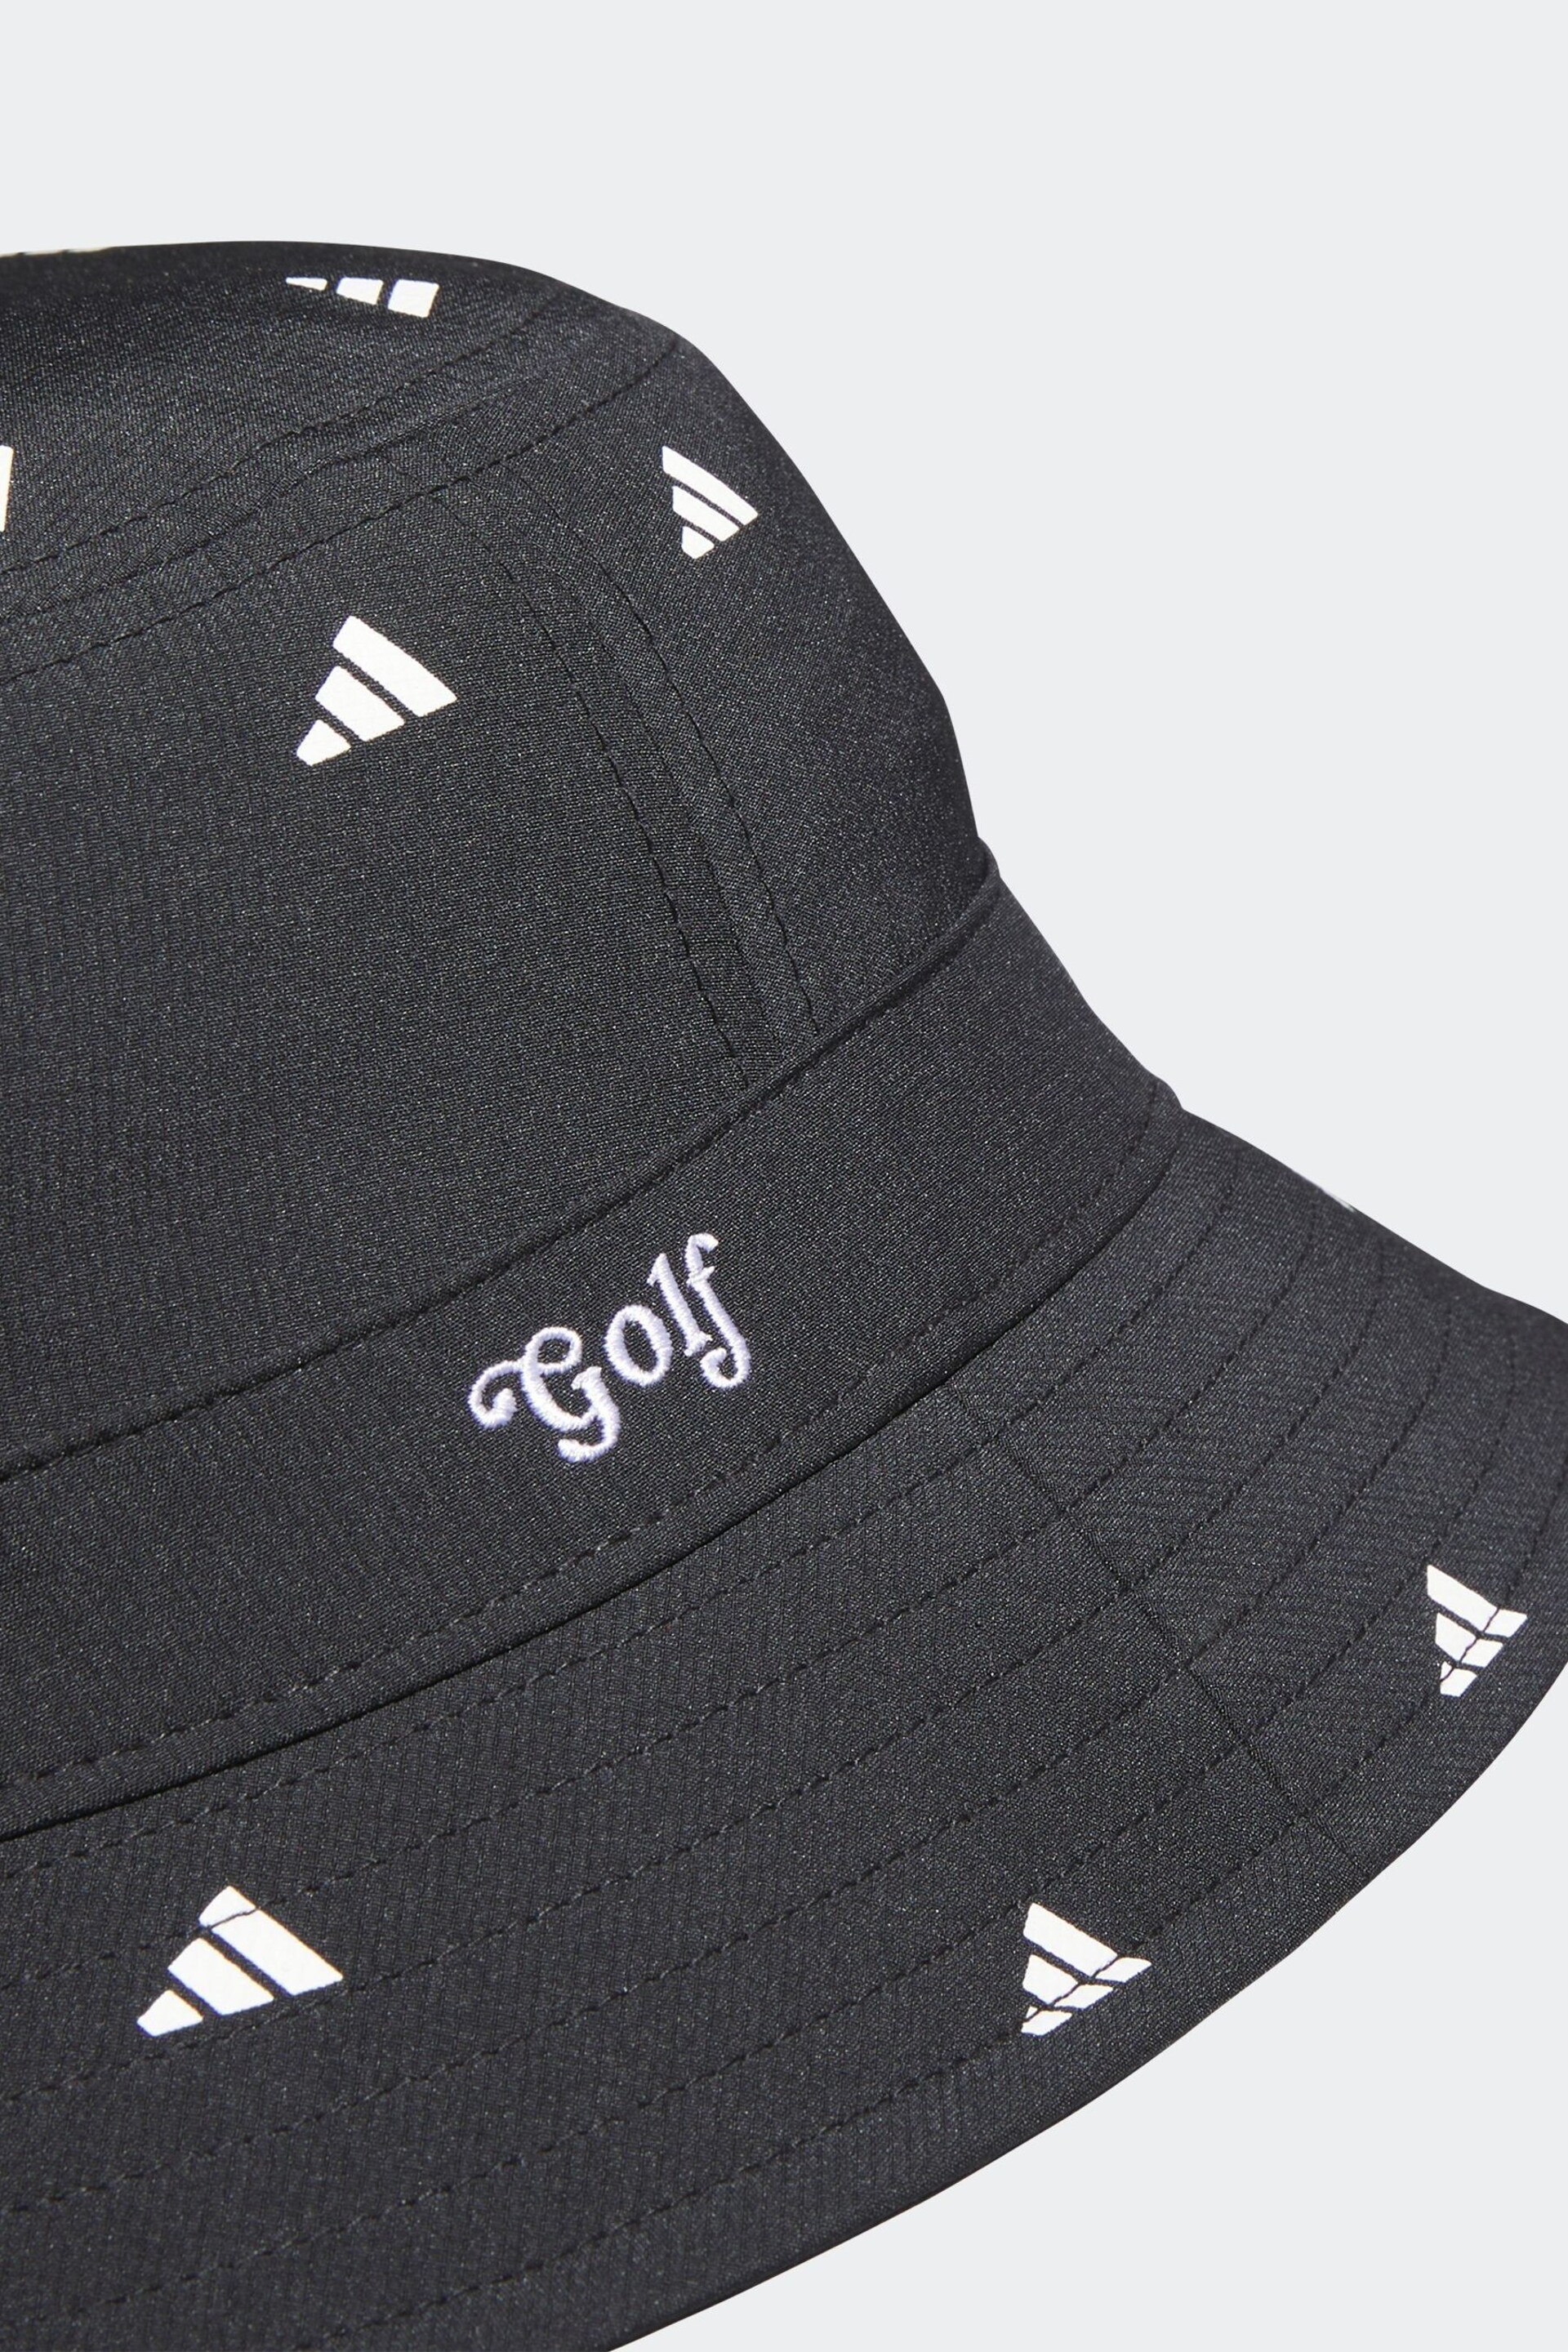 adidas Golf Womens Printed Bucket Hat - Image 3 of 4